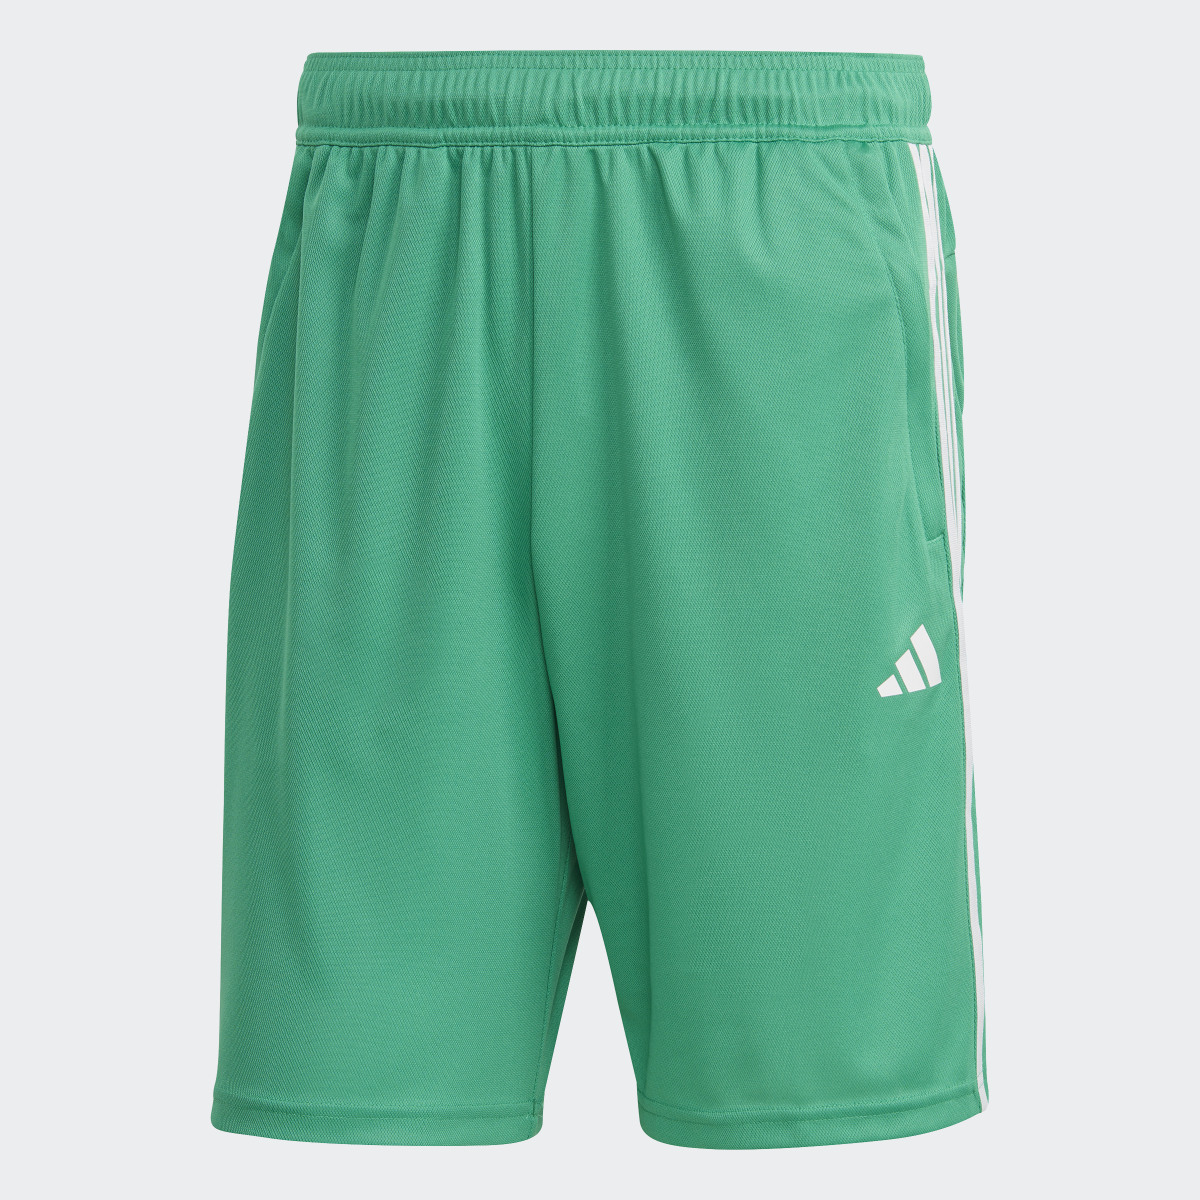 Adidas Train Essentials Piqué 3-Stripes Training Shorts. 4